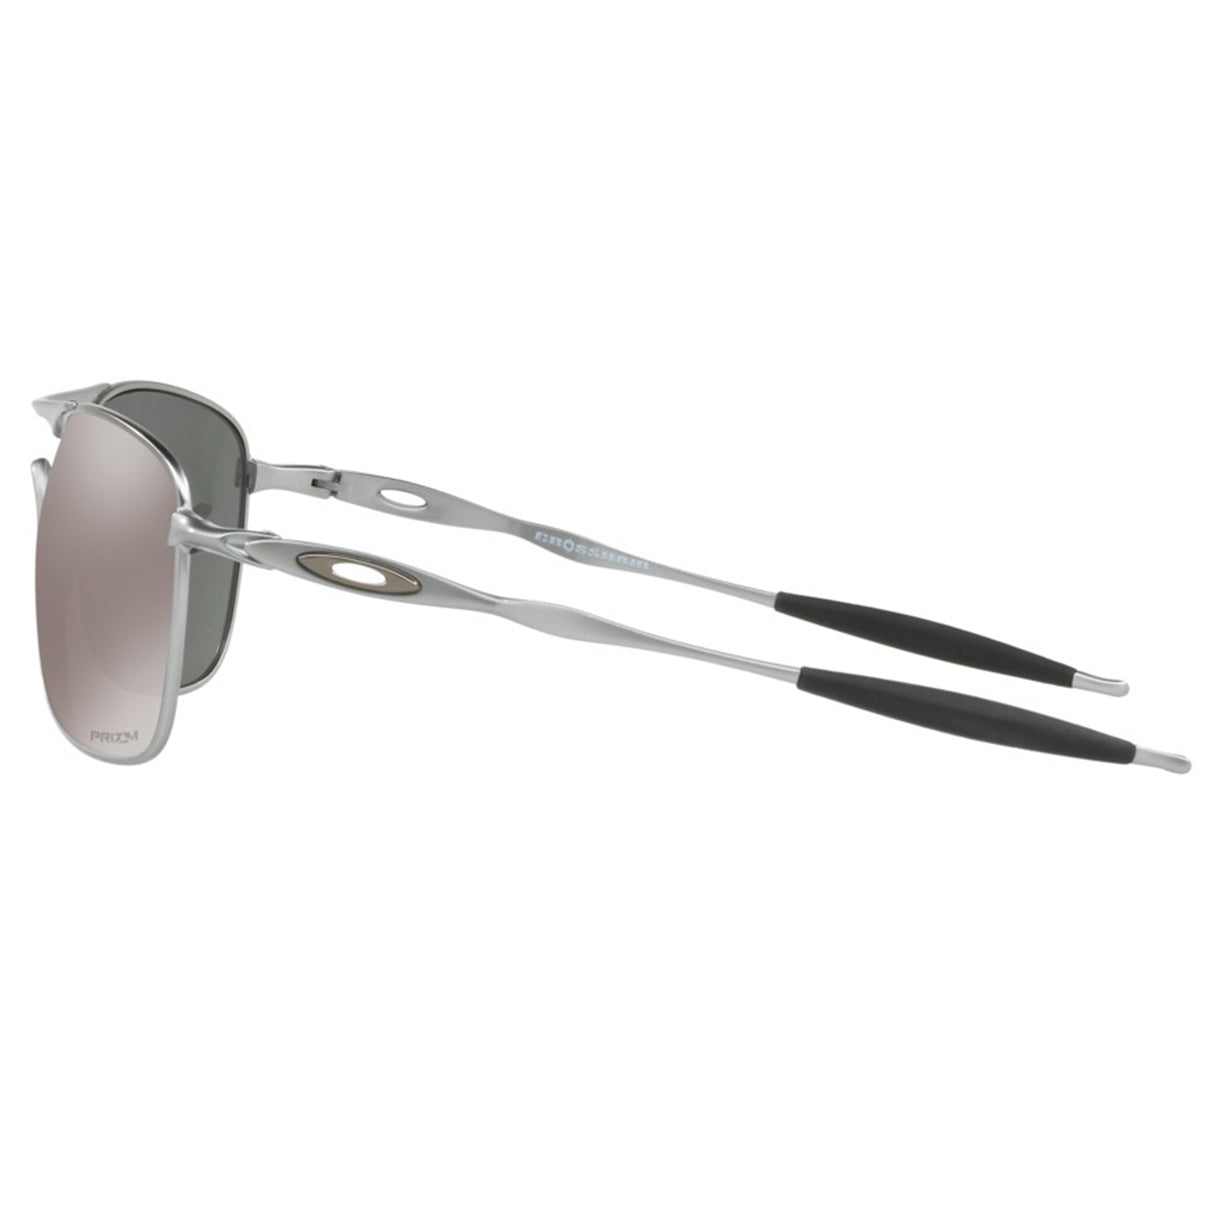 Crosshair Sunglasses